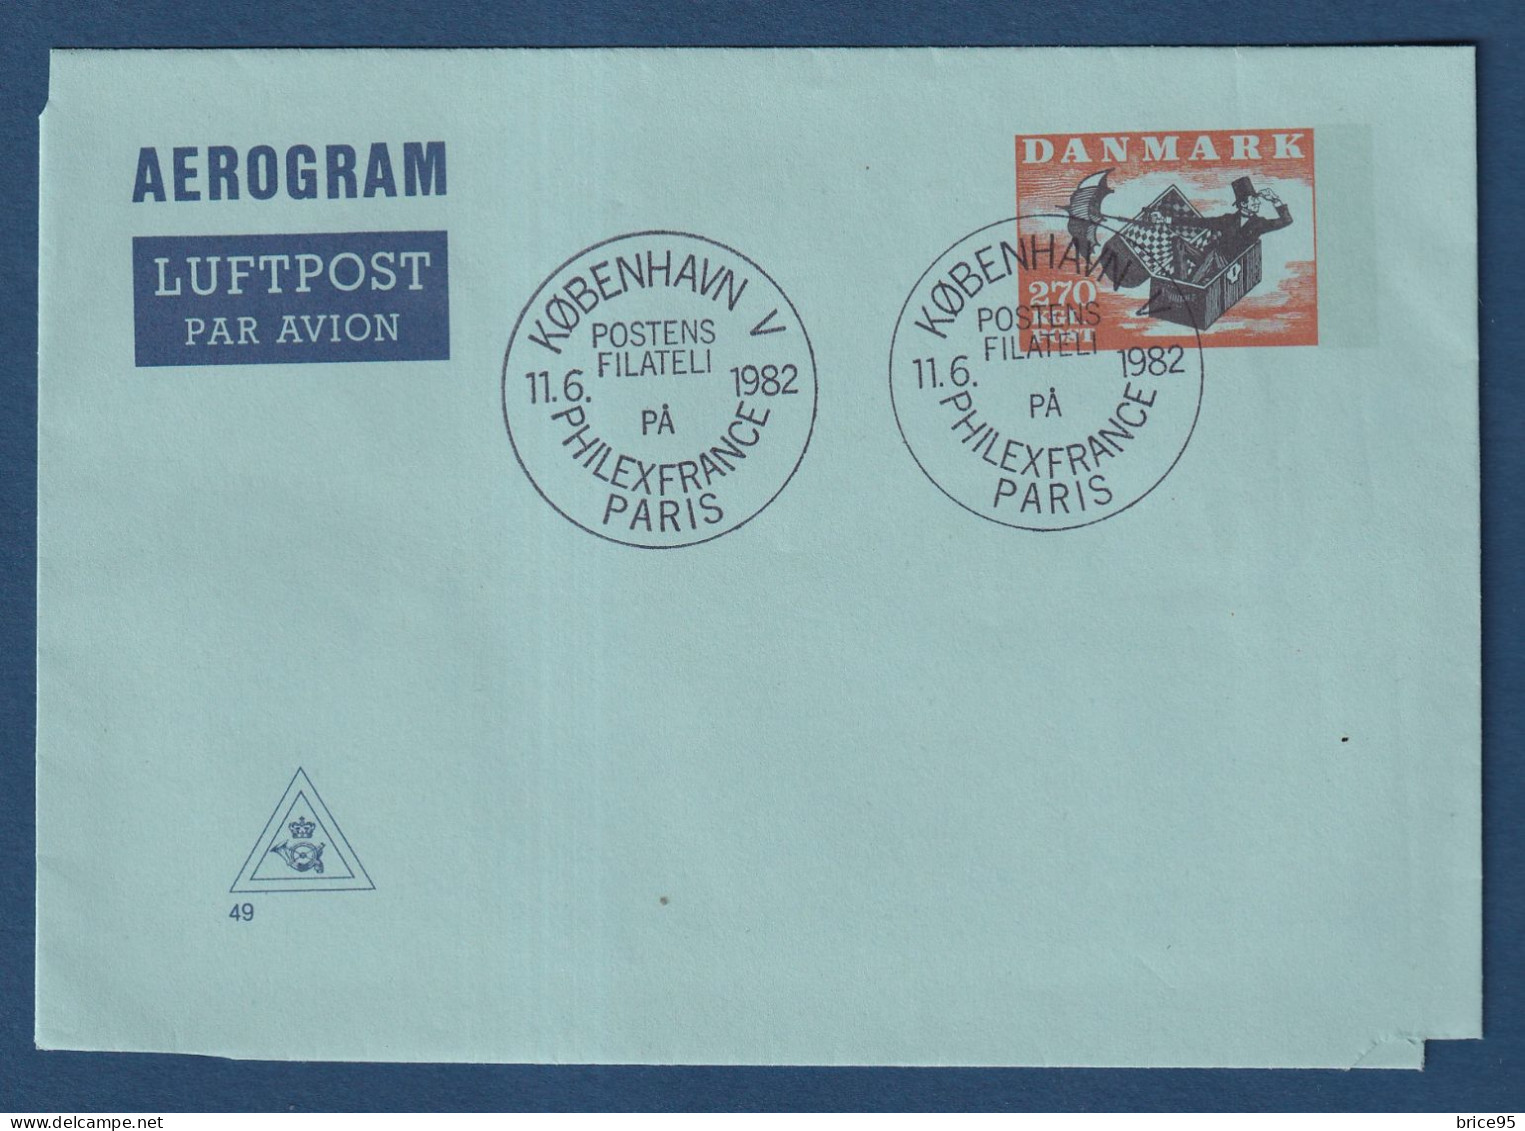 Danemark - FDC - Premier Jour - Aérogramme - PhilexFrance 82 - 1982 - Luchtpostzegels